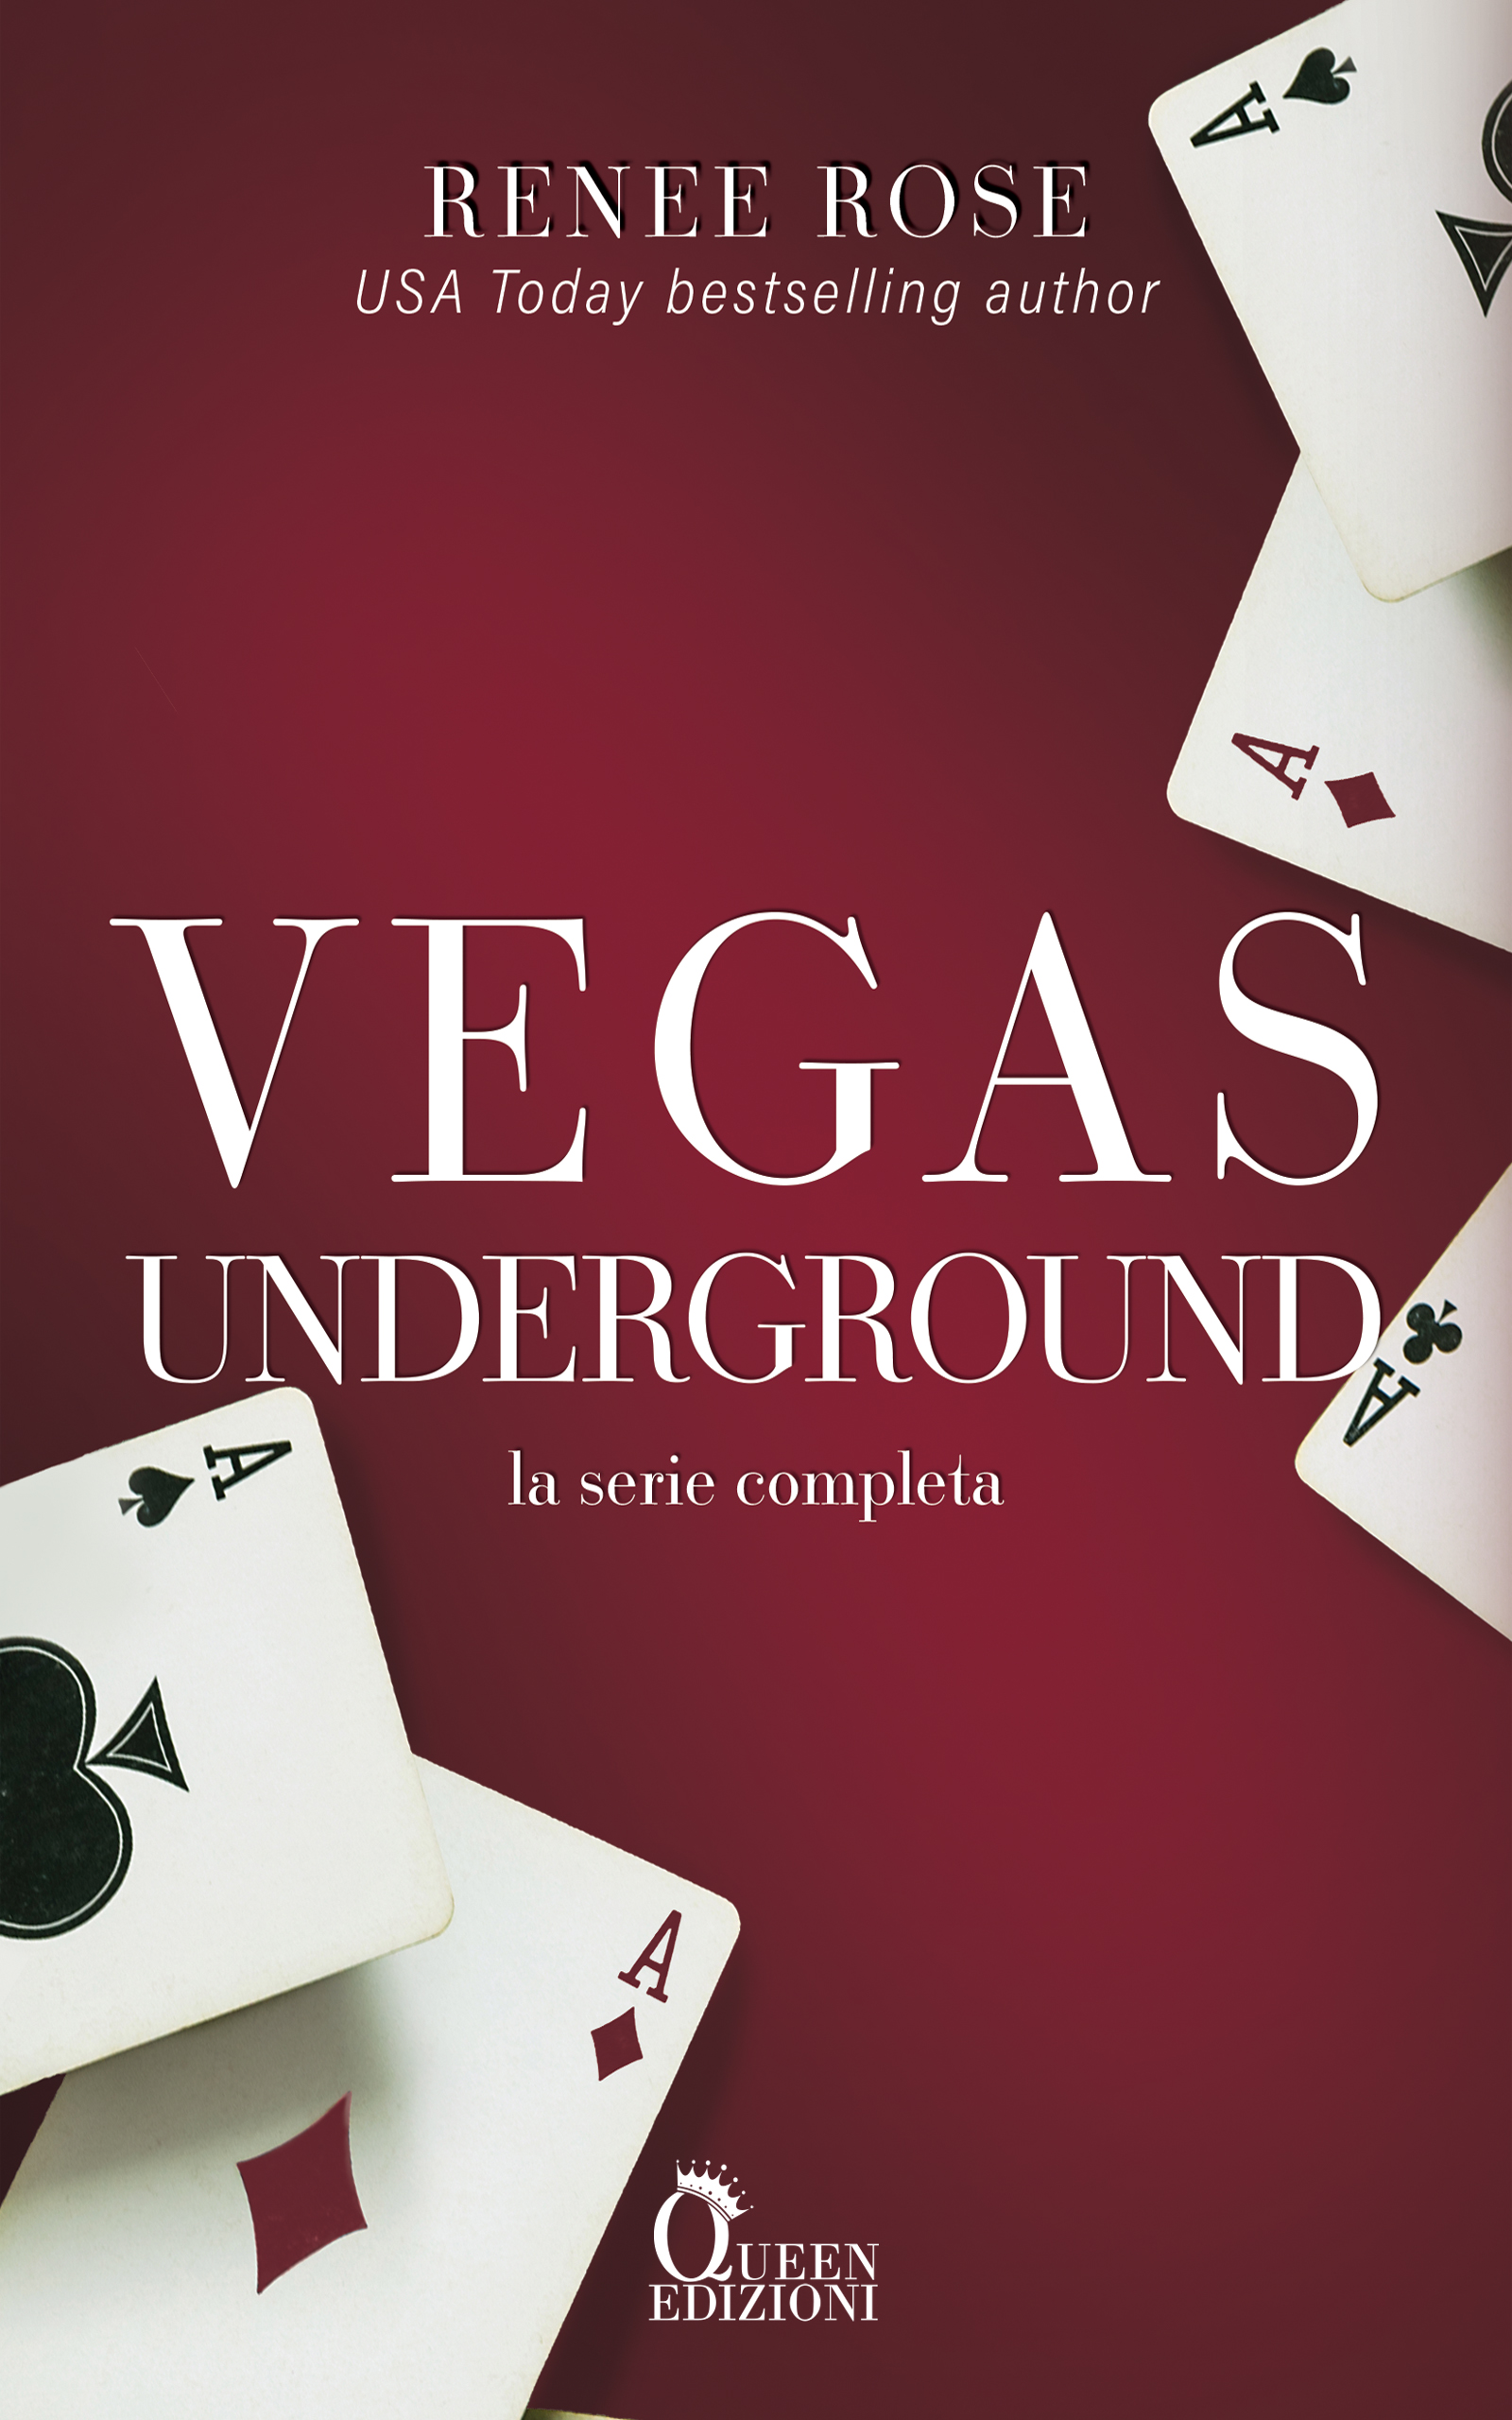 RENEE_ROSE_serie_Vegas_Underground_JPEG300